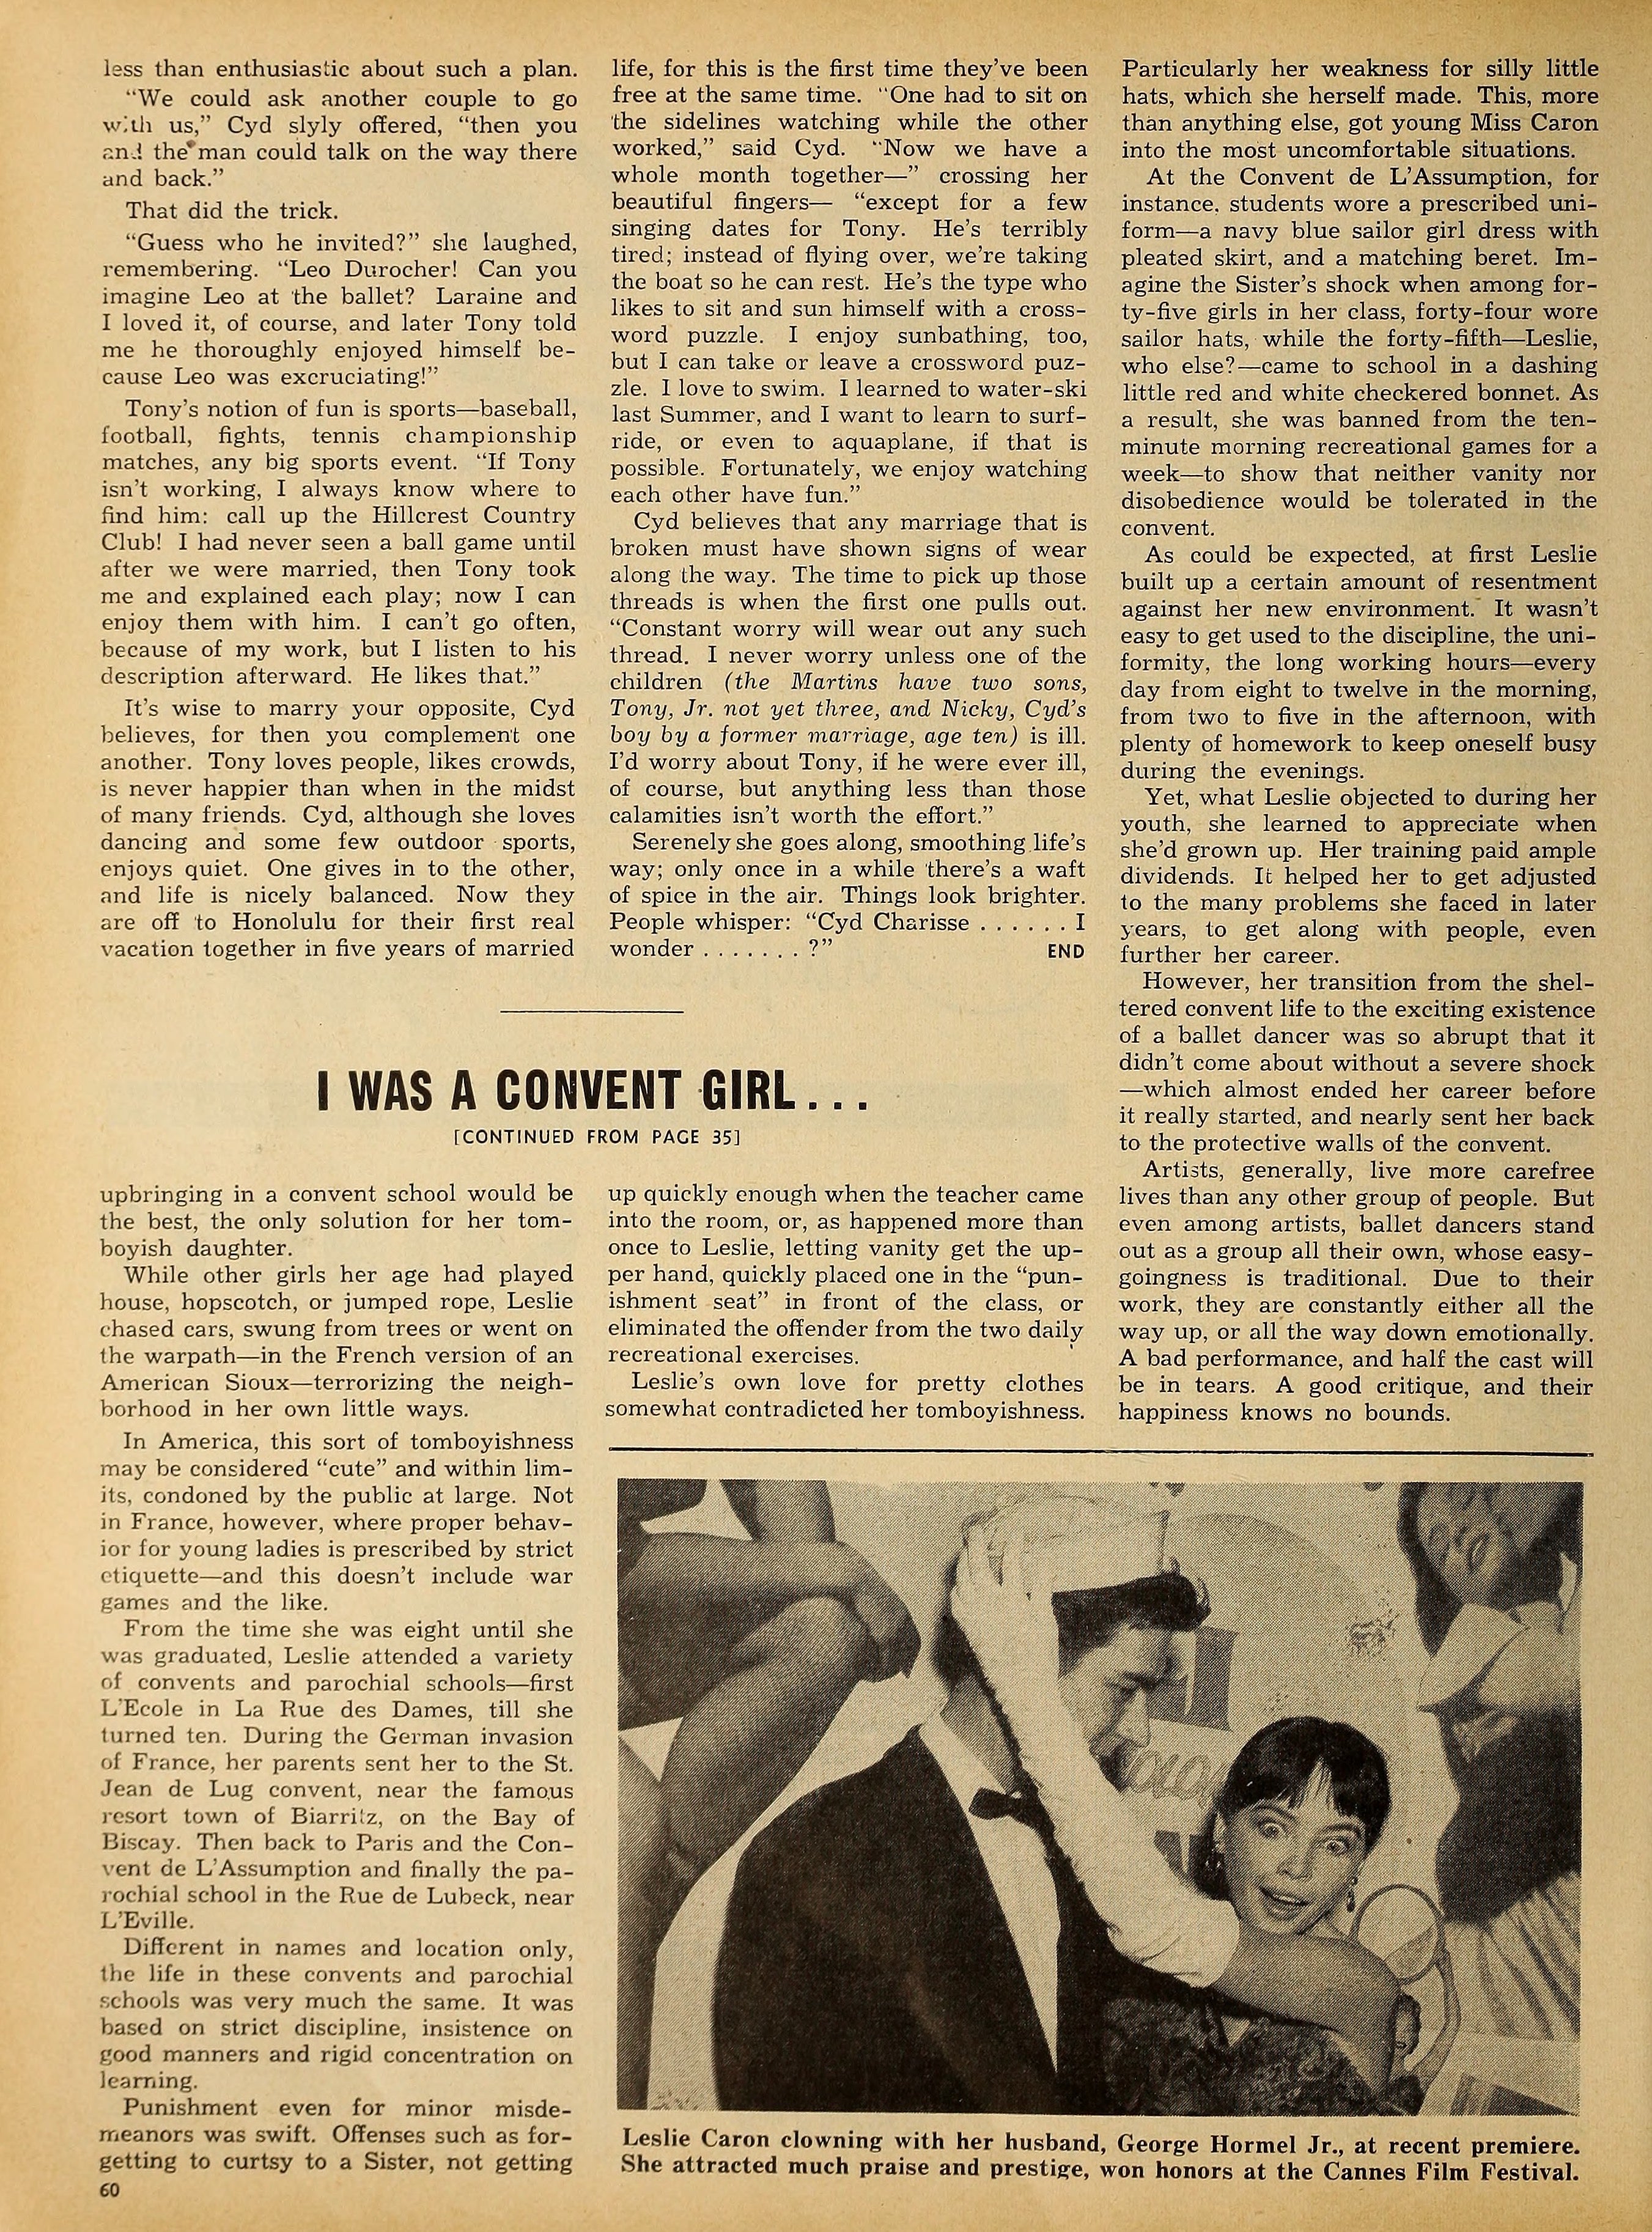 Leslie Caron — I was a Convent Girl (1953) | www.vintoz.com